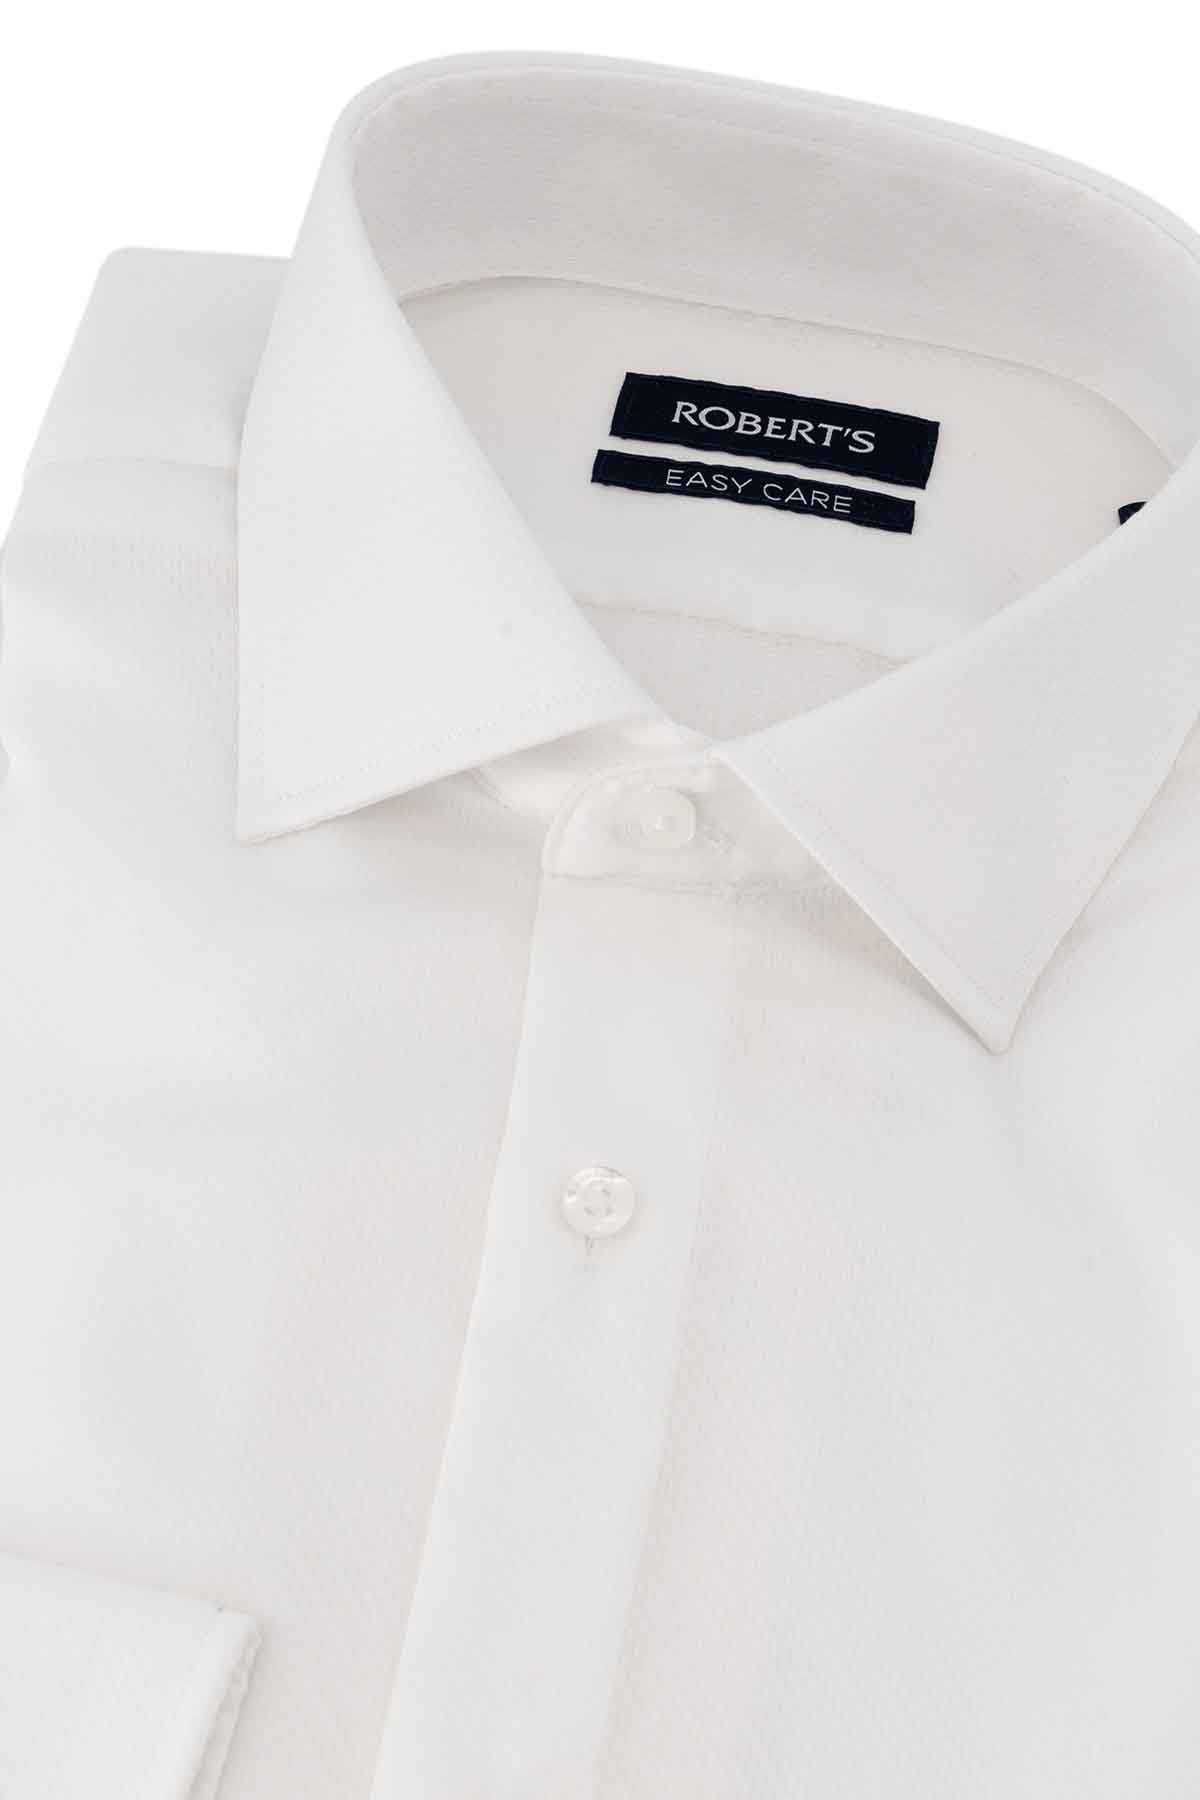 Camisa Roberts Easy Care Slim Fit Color Blanco